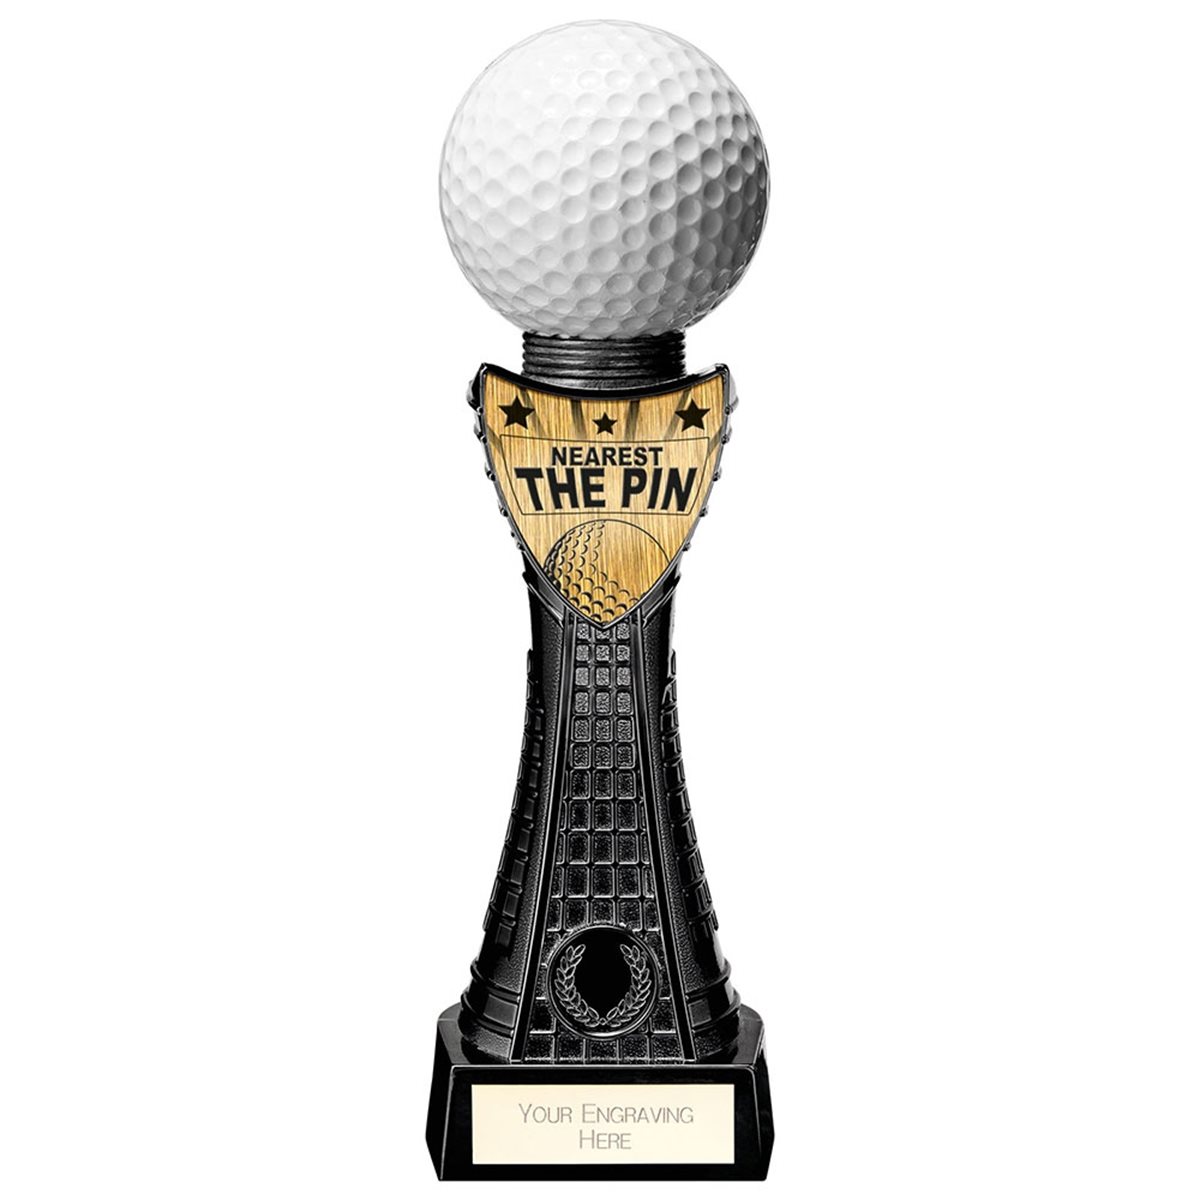 Black Viper Tower Nearest The Pin Golf Award PM22525